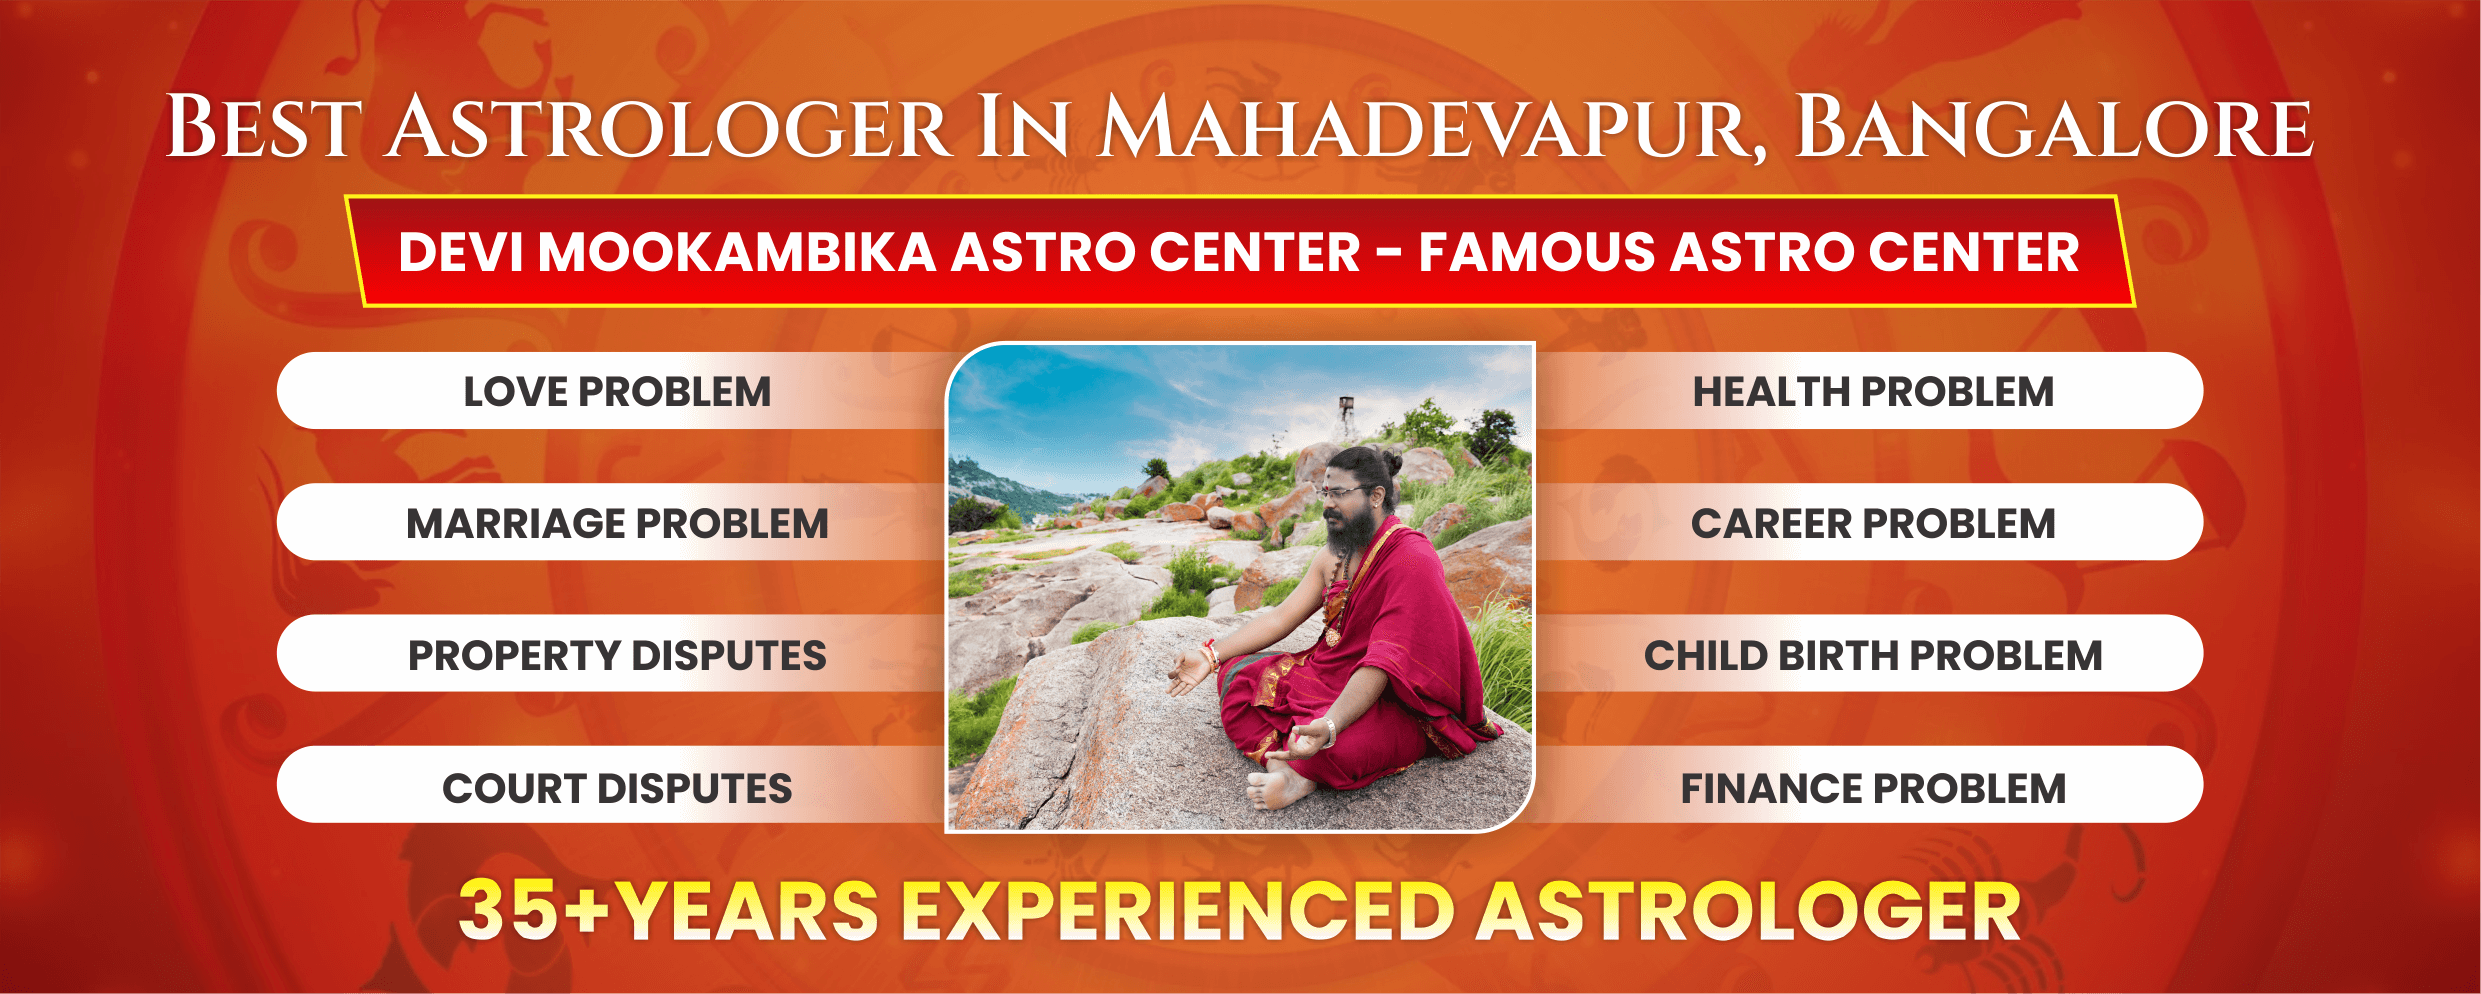 Best Astrologer in Mahadevpur Bangalore